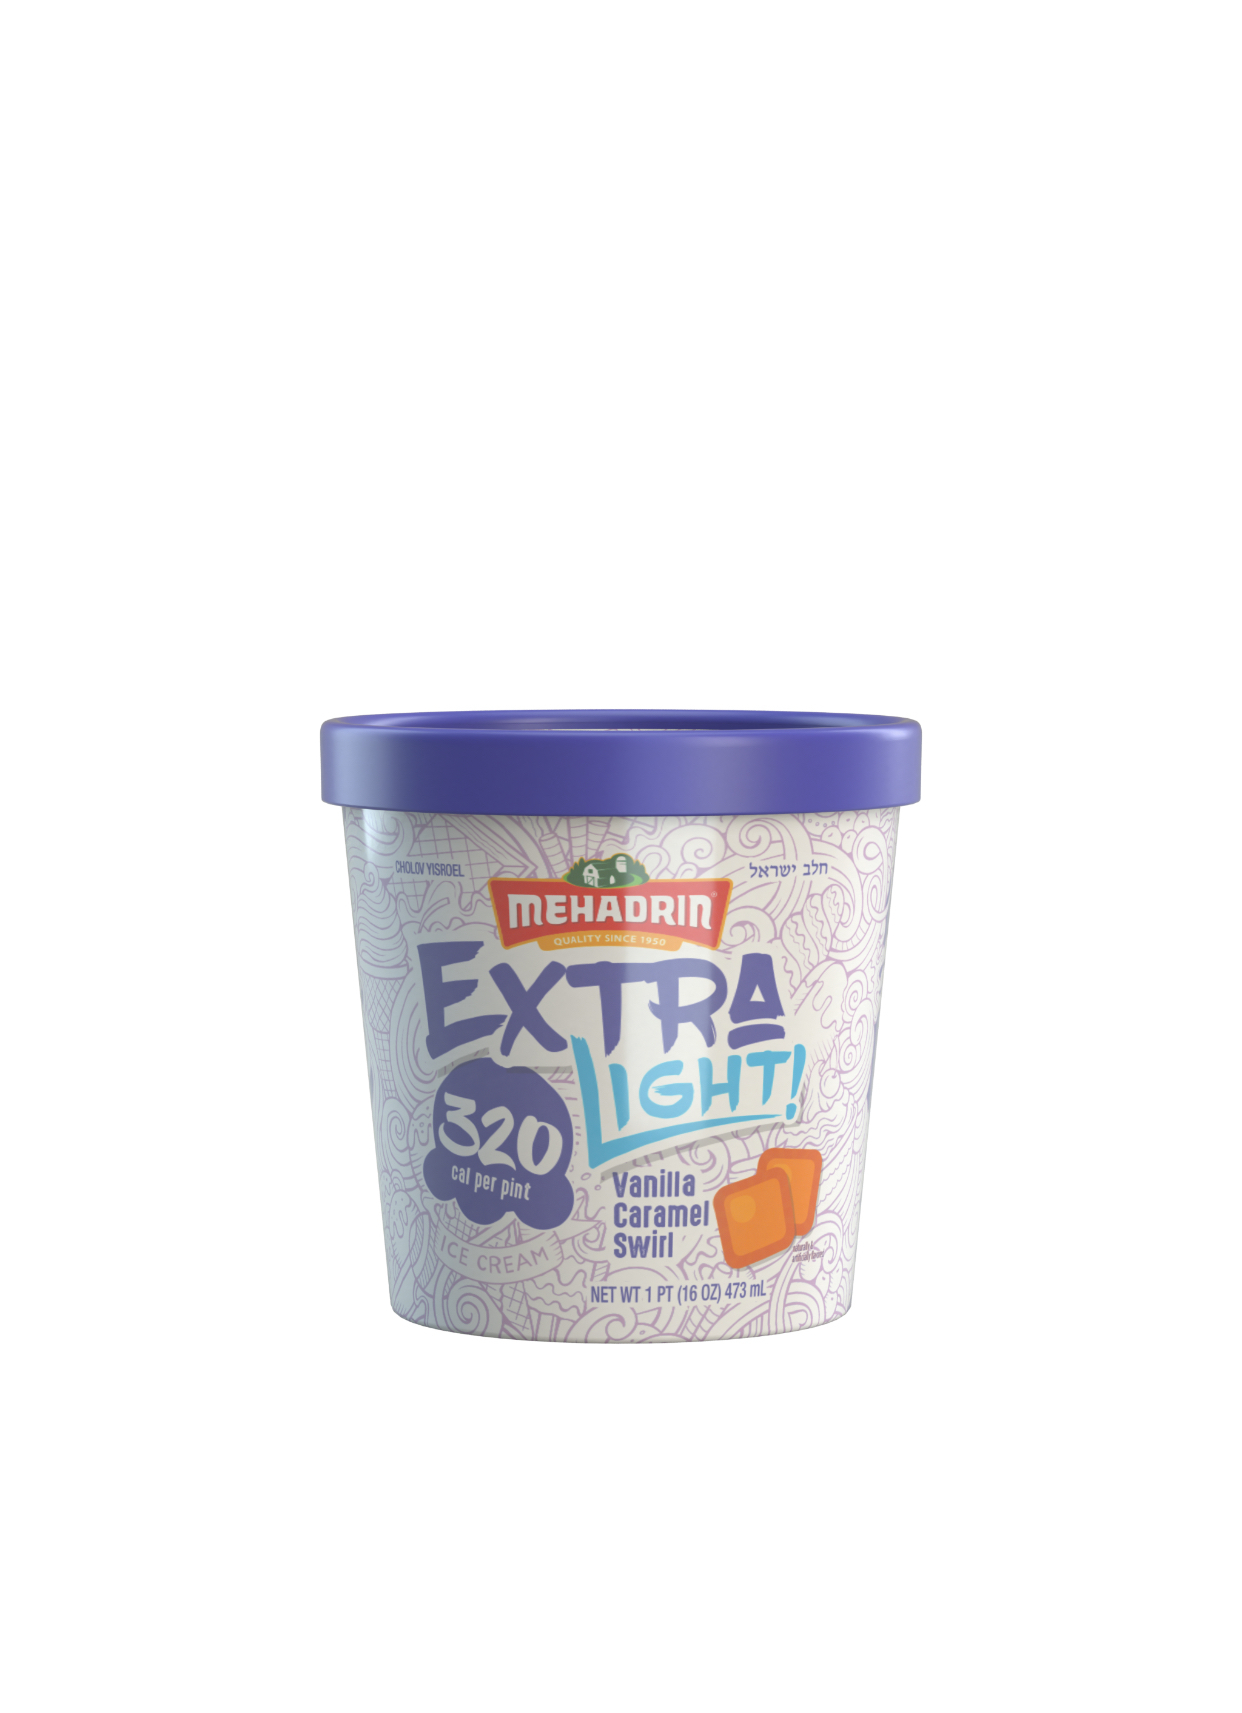 Mehadrin Extra Light Ice Cream